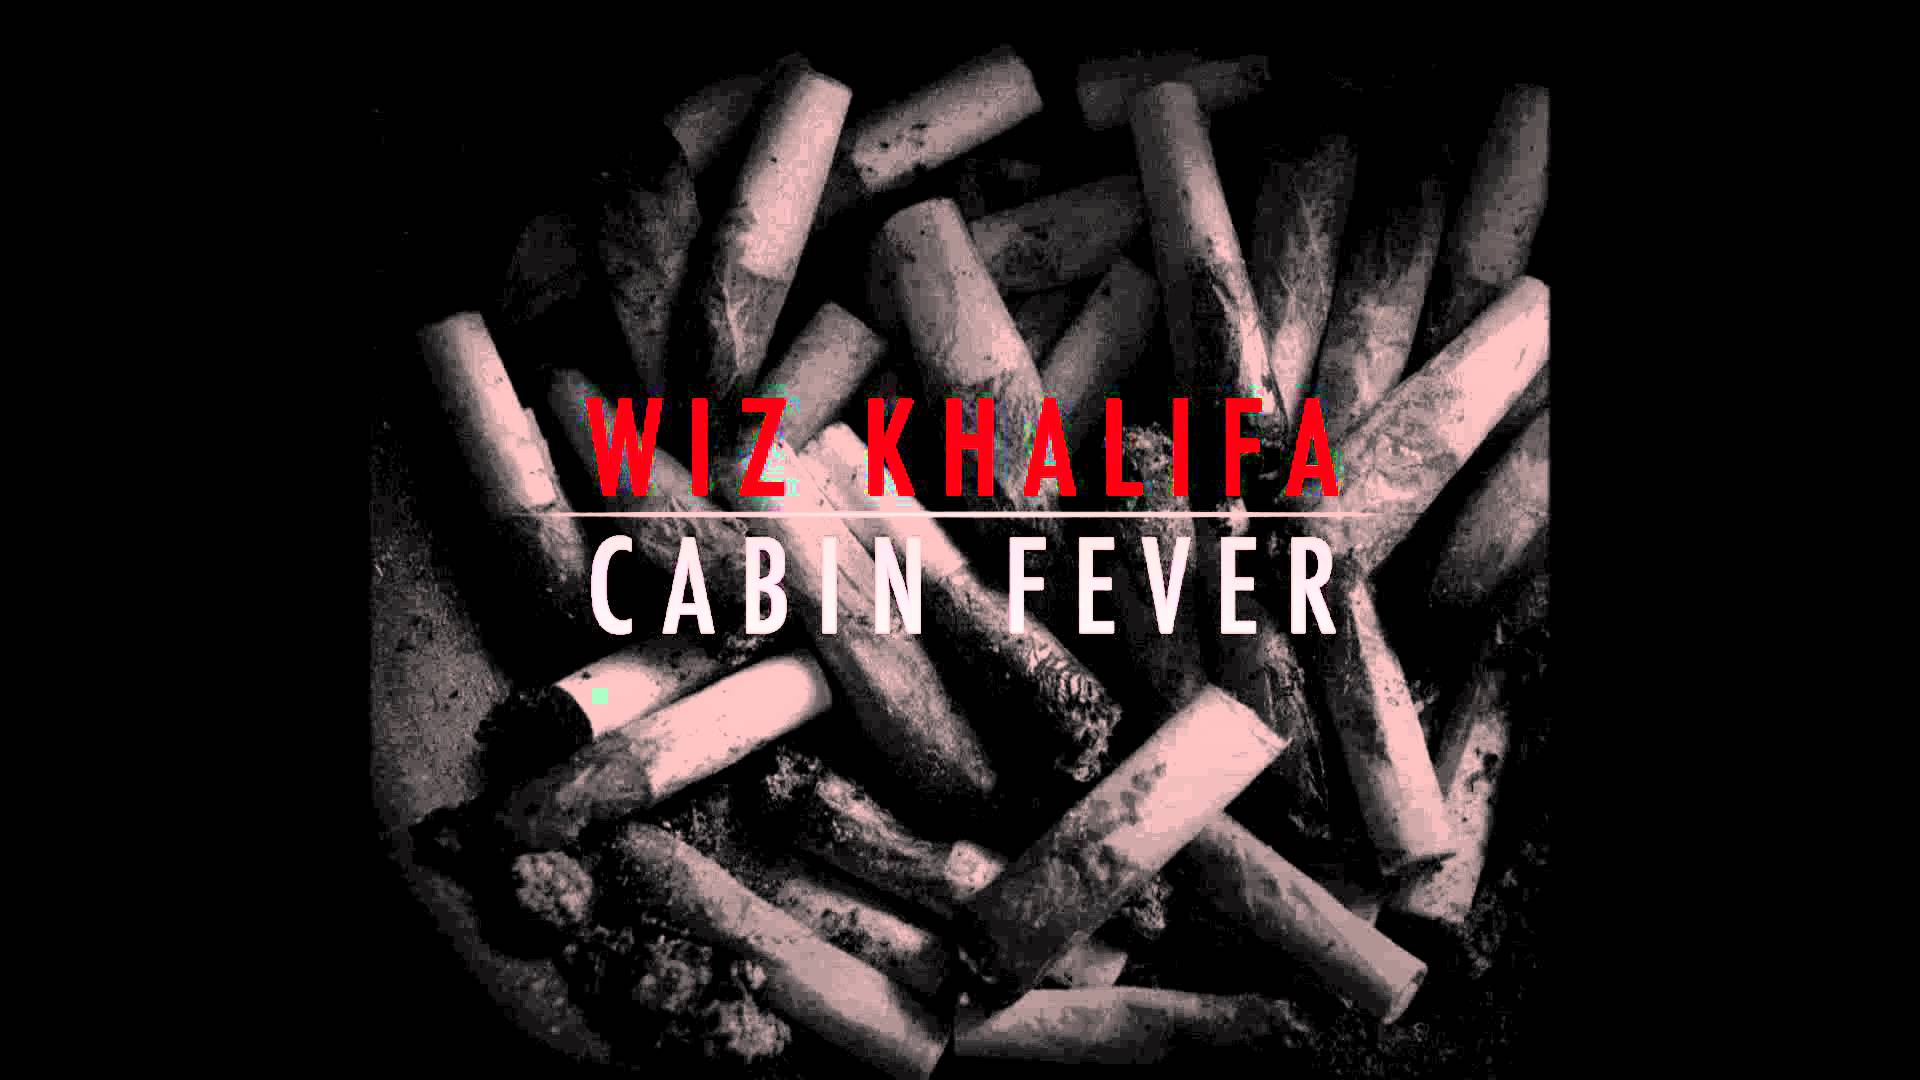 Wiz Khalifa - Taylor Gang CDQ Version - YouTube